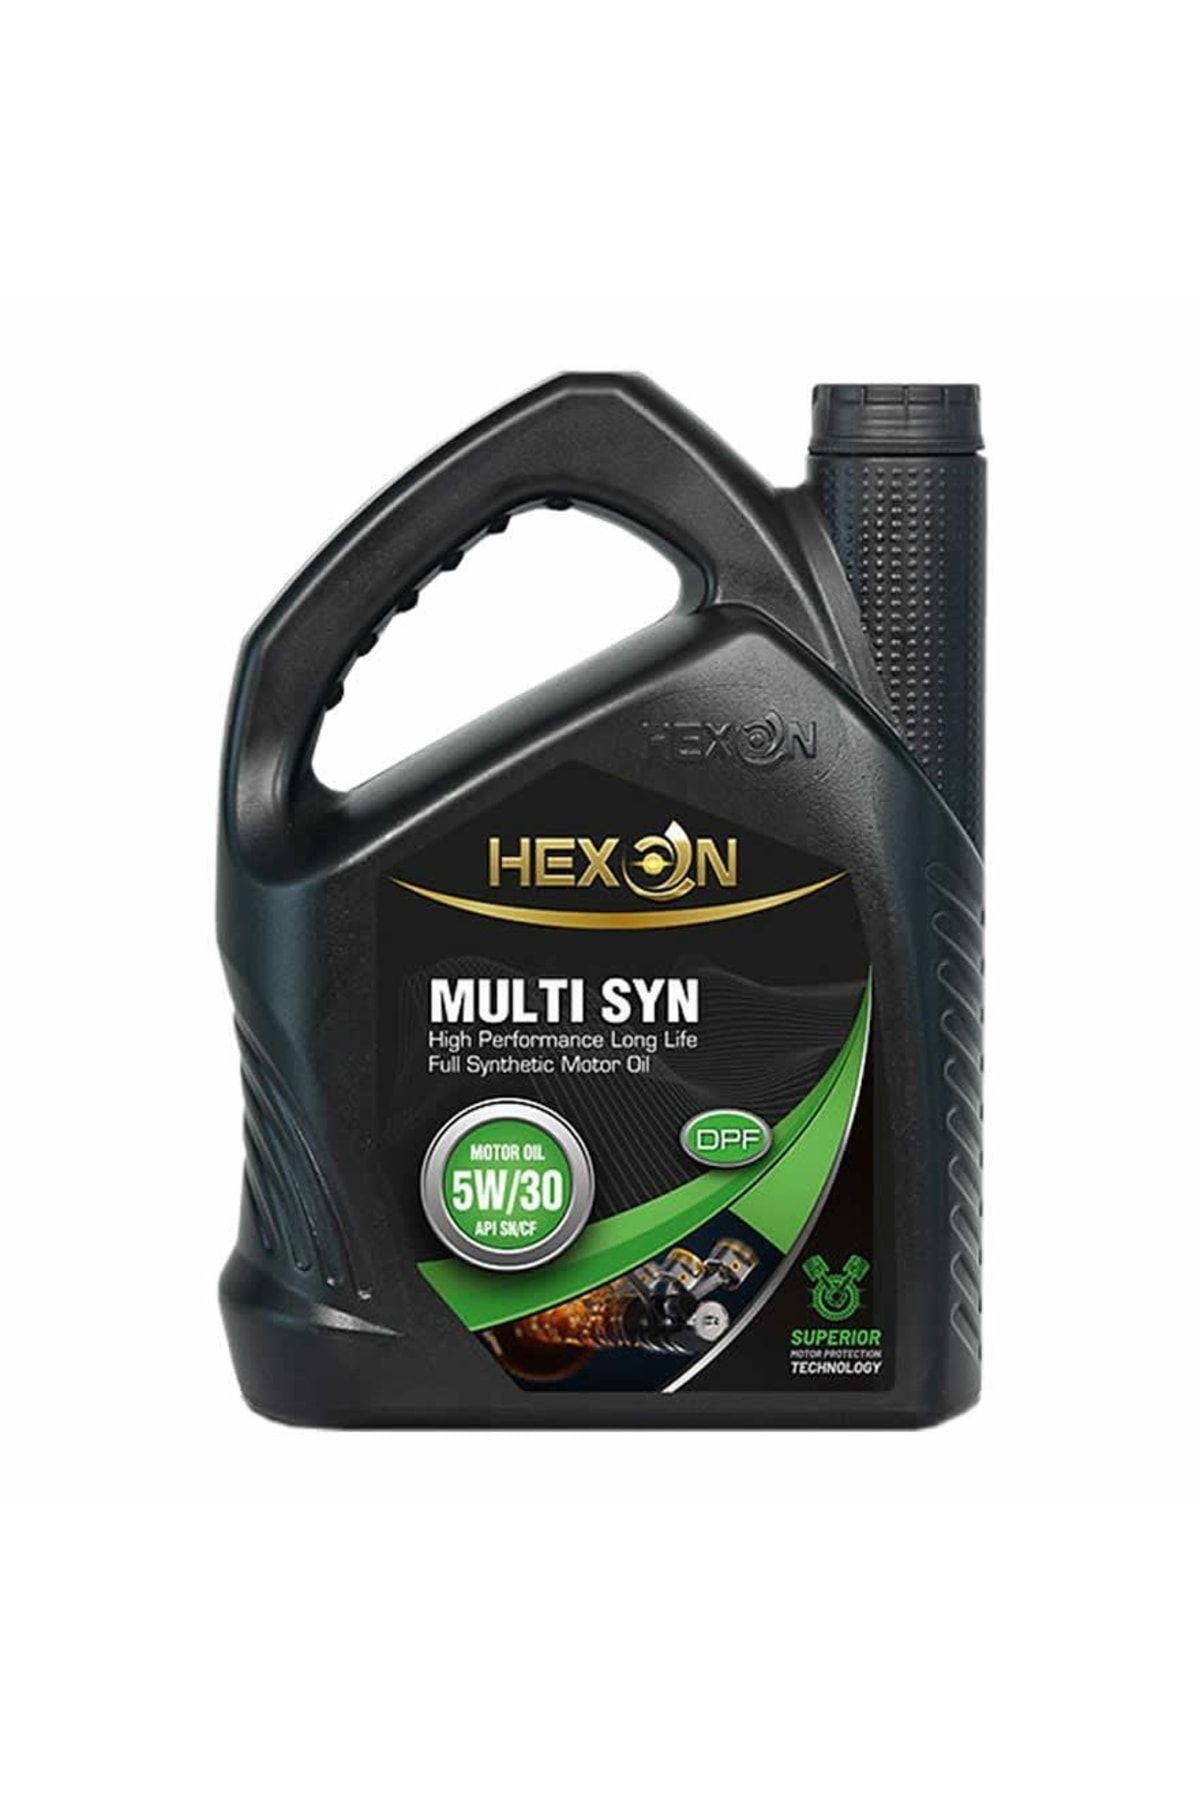 Hexon 5w30 турецкое масло. Syn5l. Озон масло 5 w30 ДПФ Япония. Хексон. Моторное масло 5w30 dpf